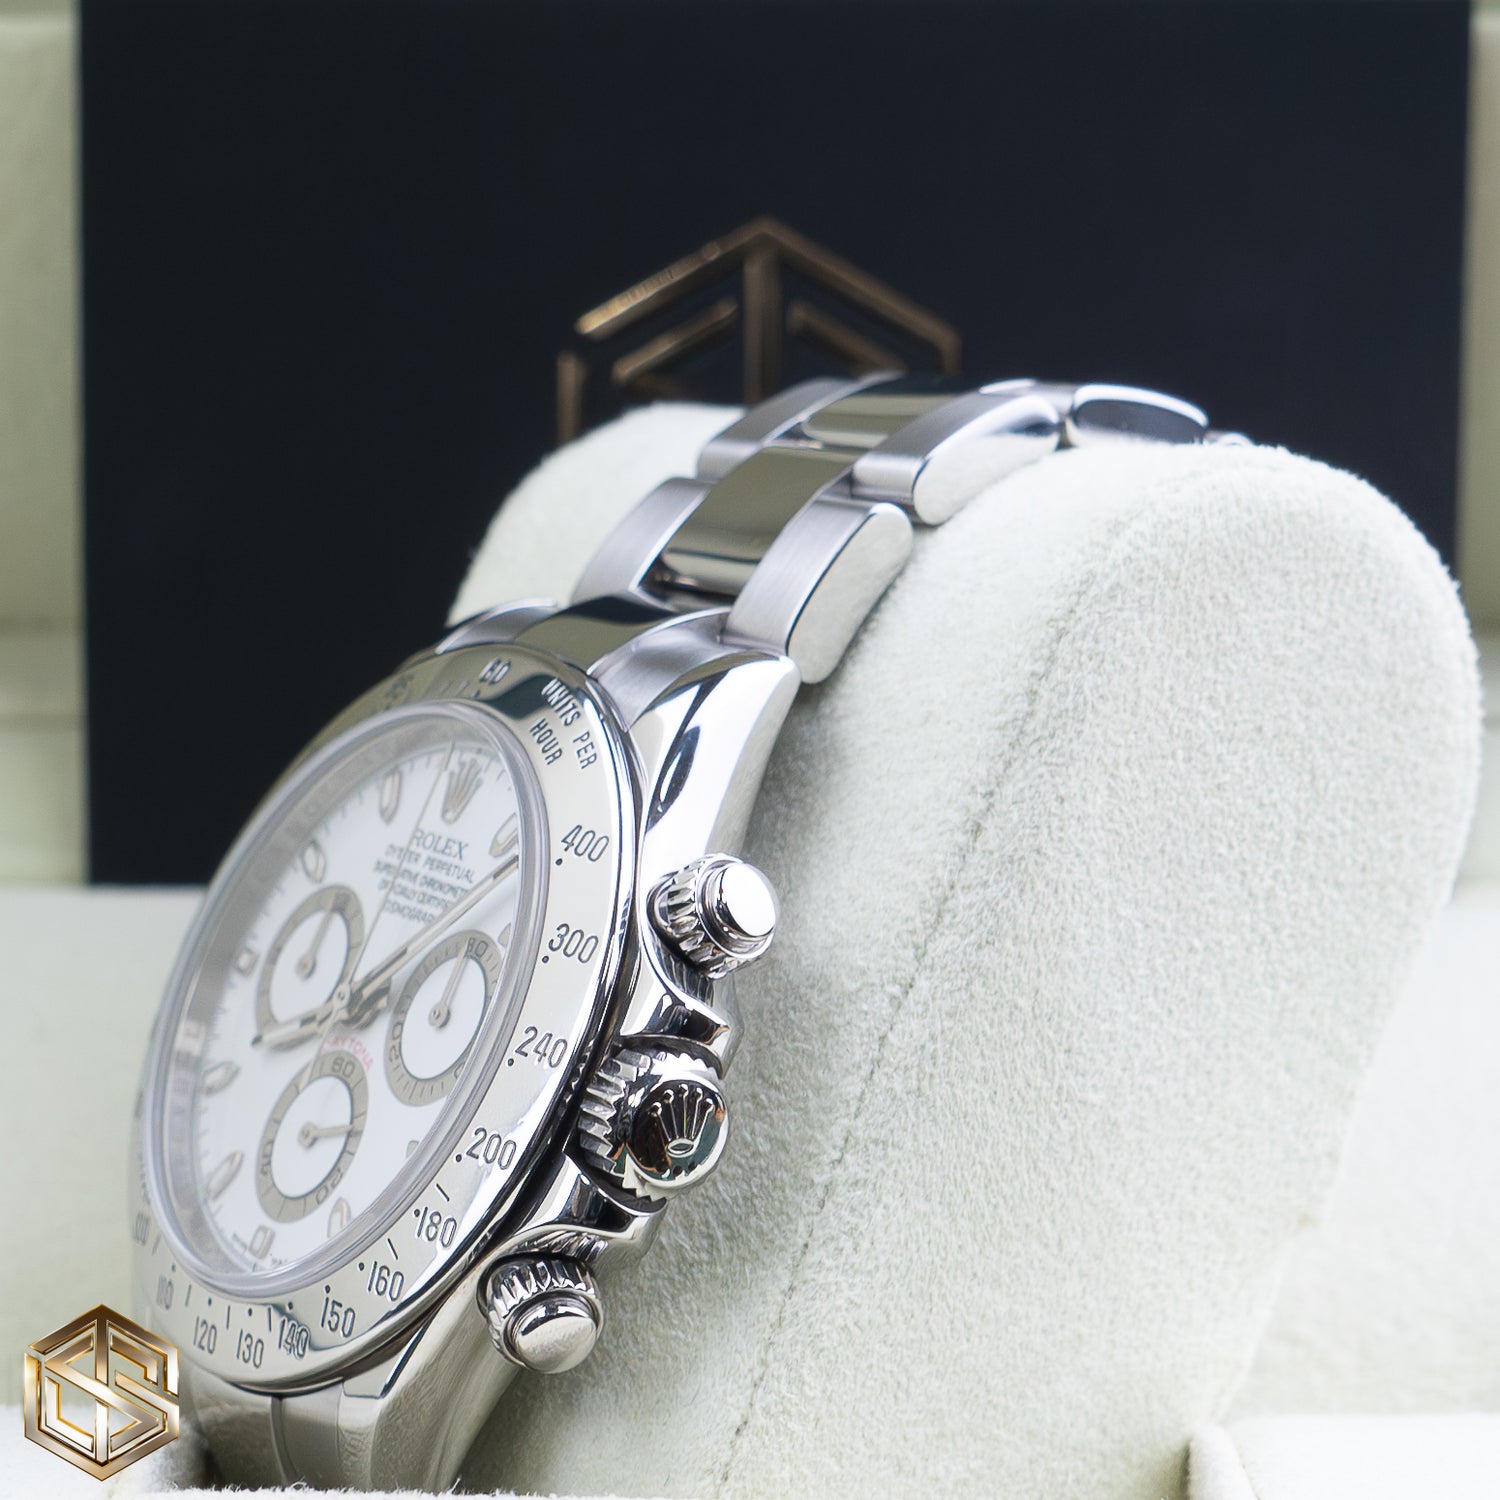 Rolex 116520 Cosmograph Daytona White Dial 2008 Full Set Watch